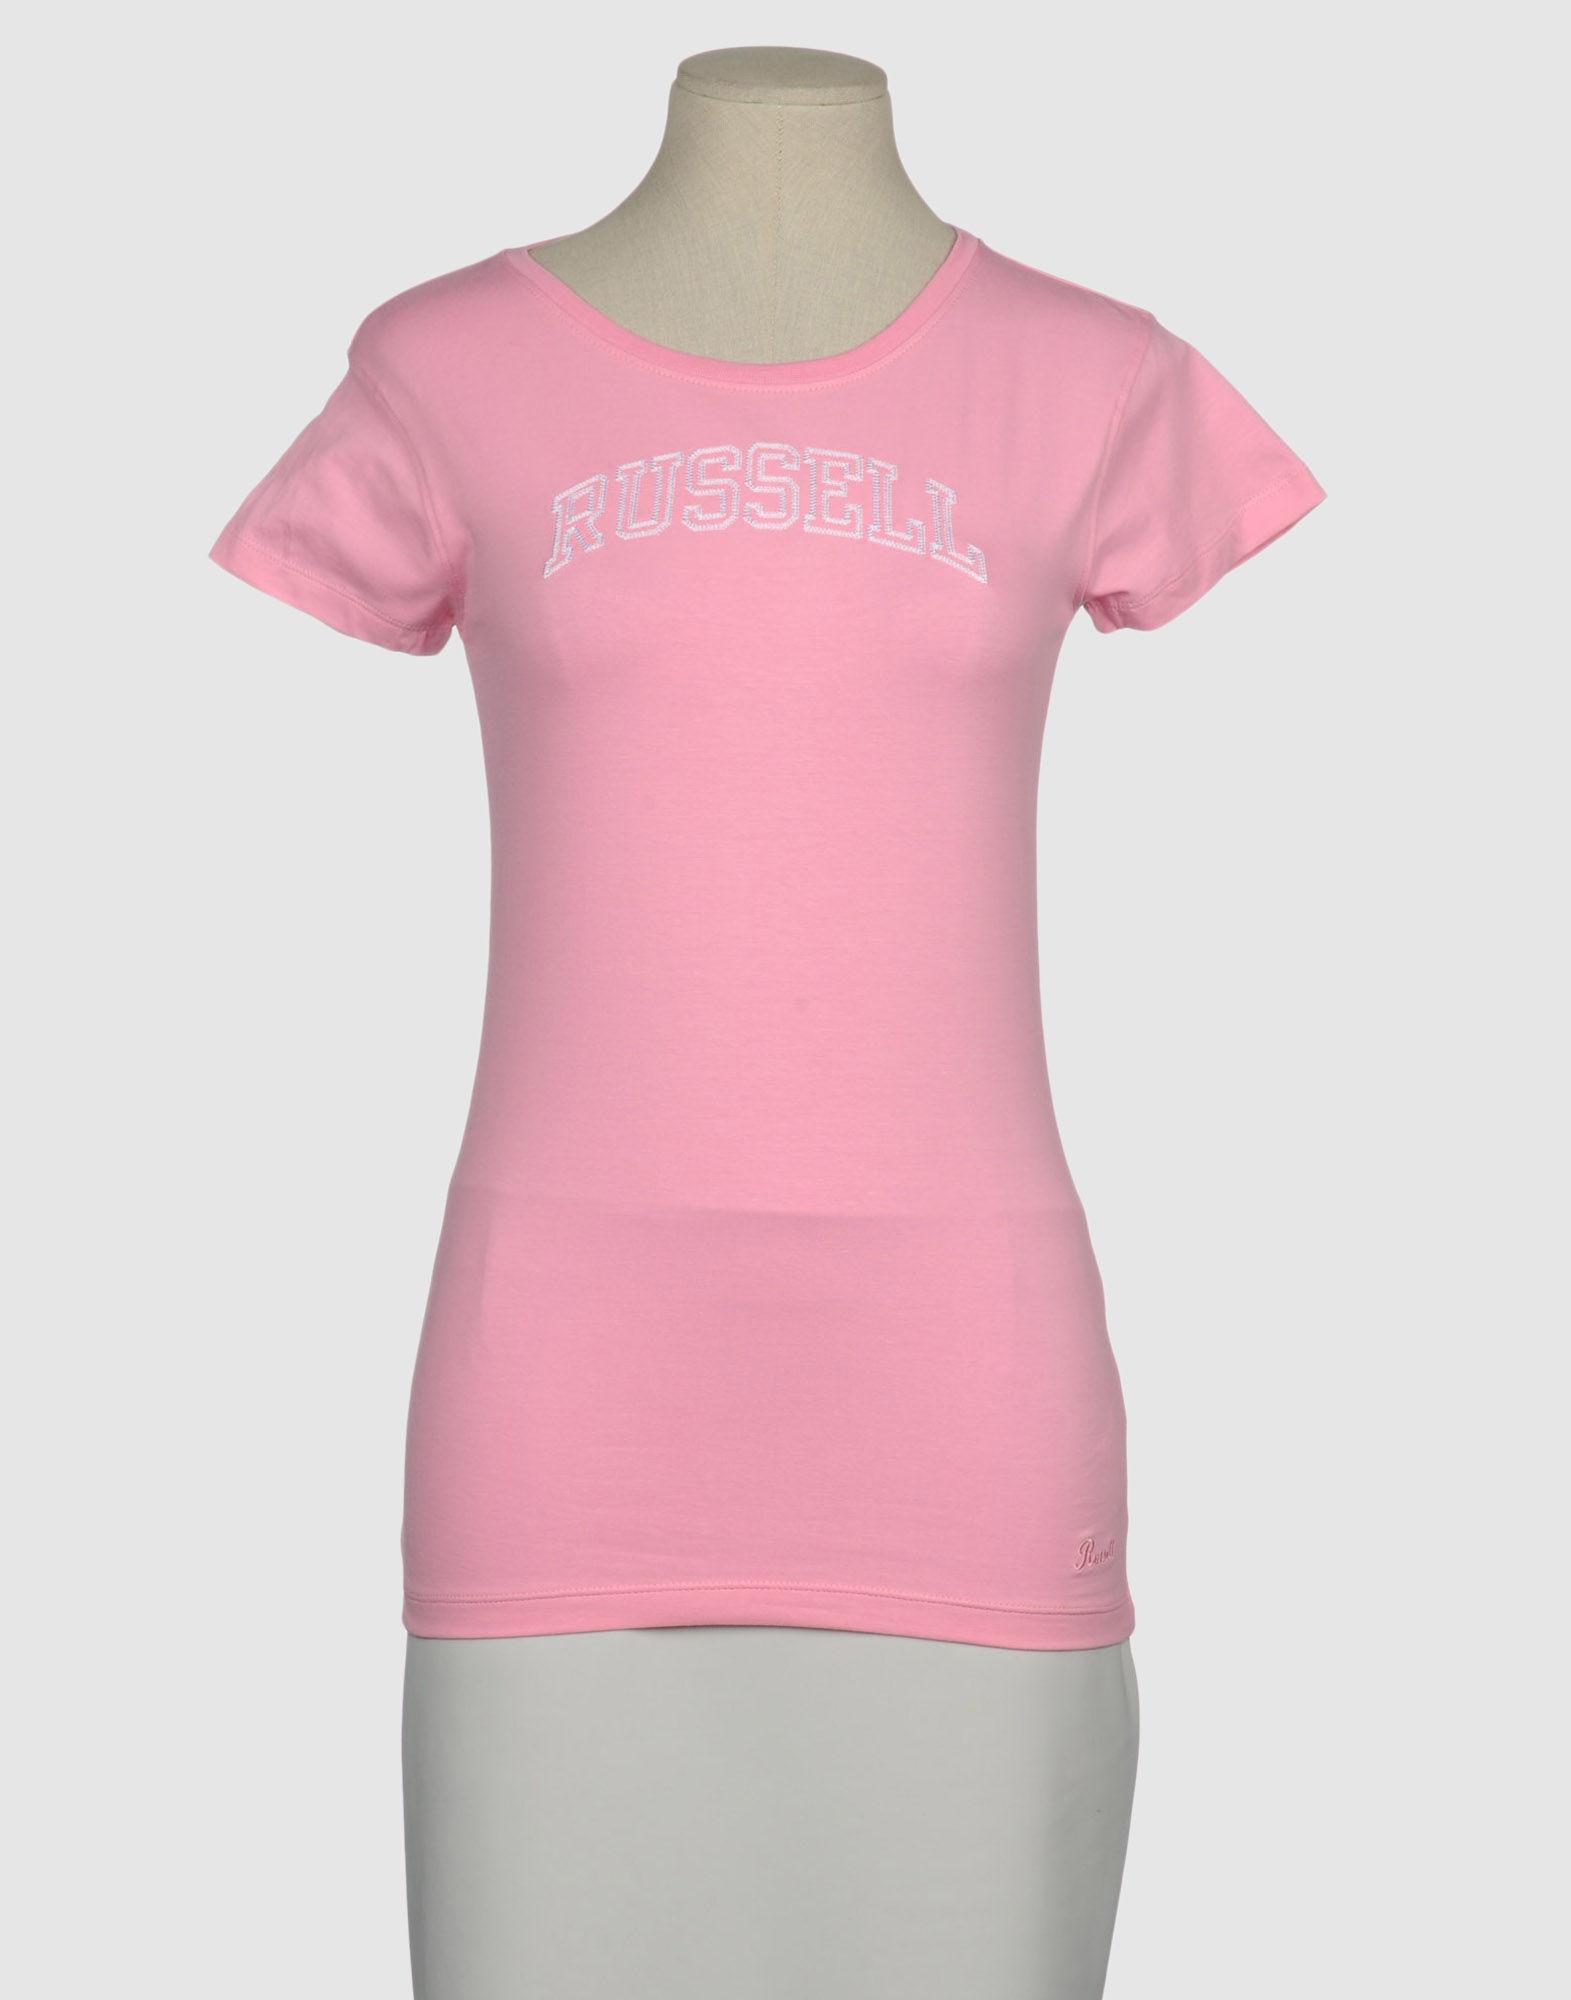 Foto Russell Athletic Camisetas De Manga Corta Mujer Rosa